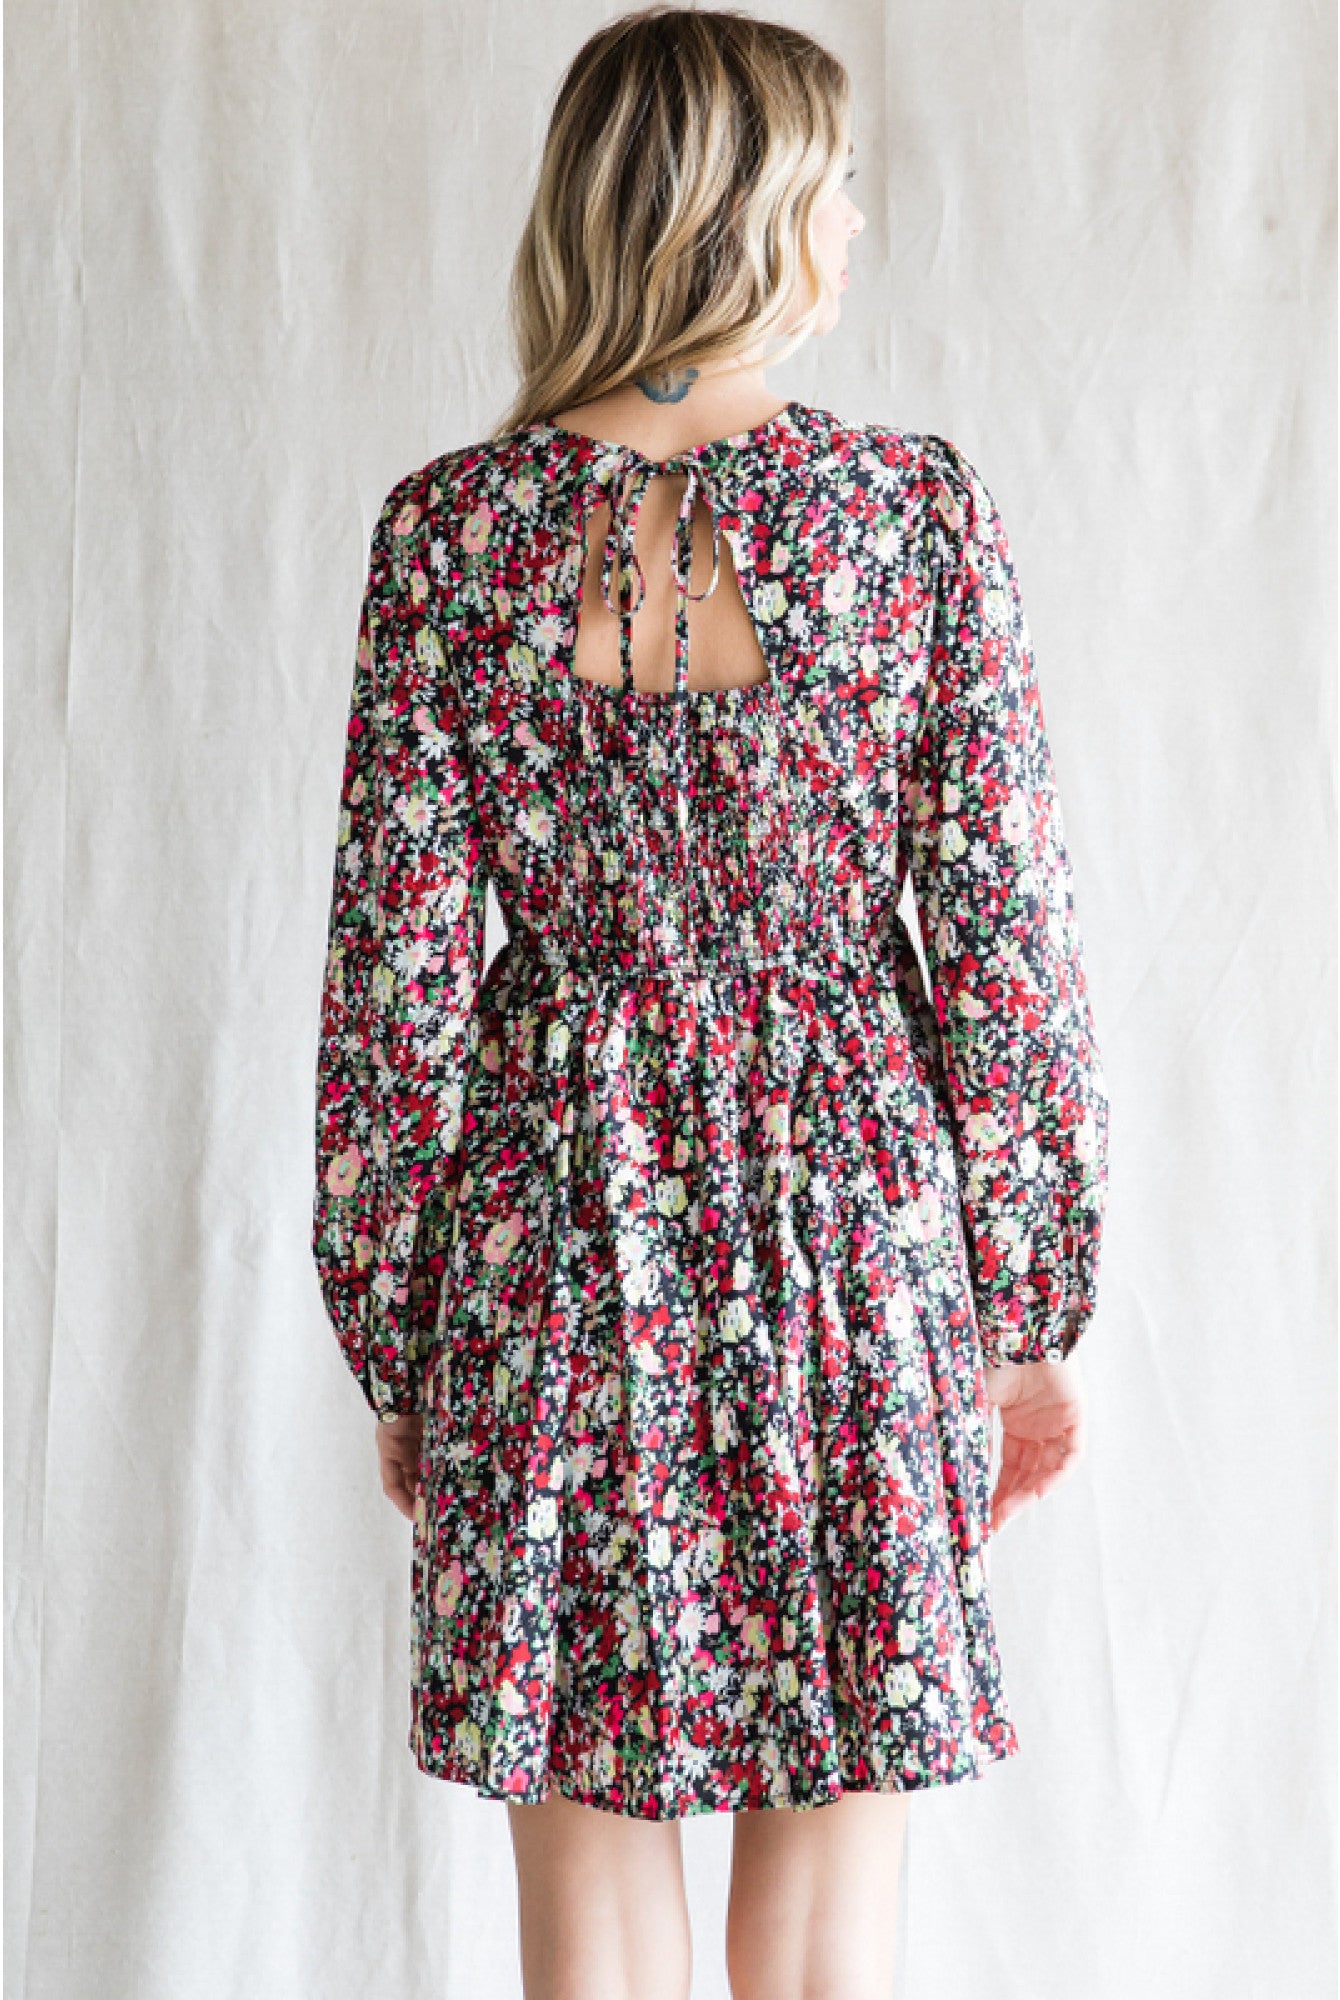 Floral dress w/ U-neck back tie closure-Short Dresses-Podos Boutique, a Women's Fashion Boutique Located in Calera, AL